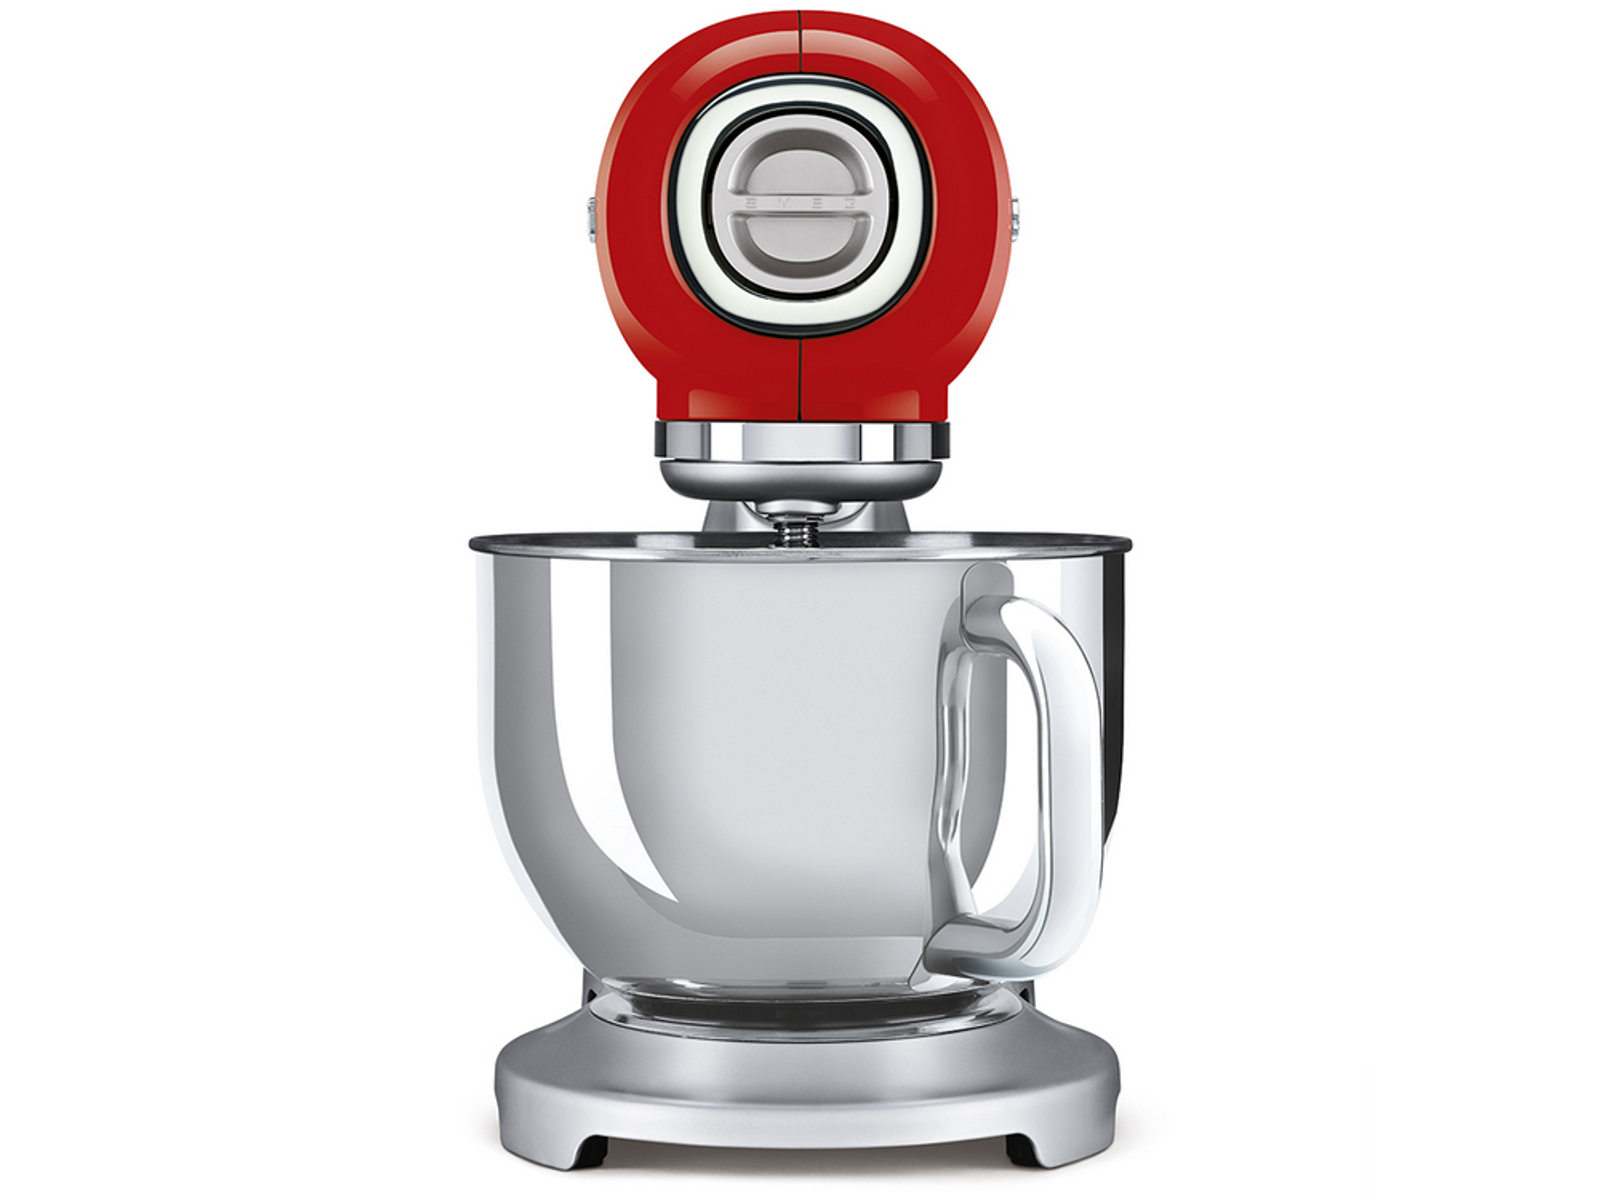 SMEG Smeg SMF02RDEU Küchenmaschine Rot Design Watt) (800 50\'s Rot Küchenmaschine